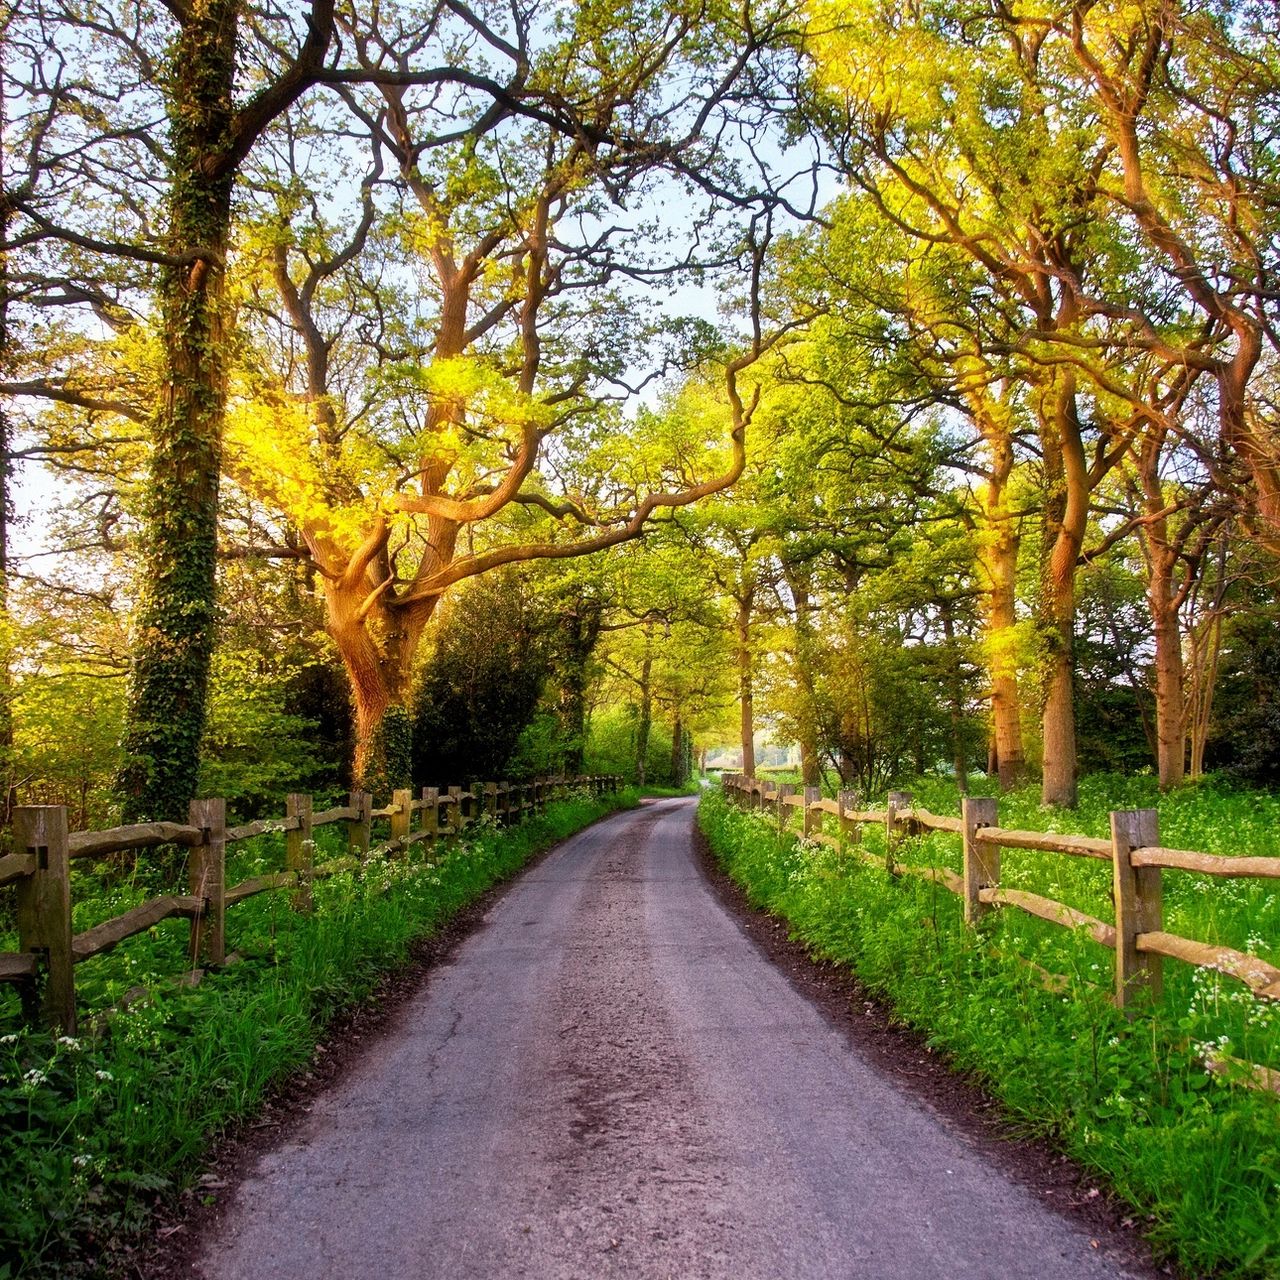 Wonderful country. Природа Англии. Поляна с забором и деревьями. Летняя дорога стиль. Фон природы с деревьями и забором.